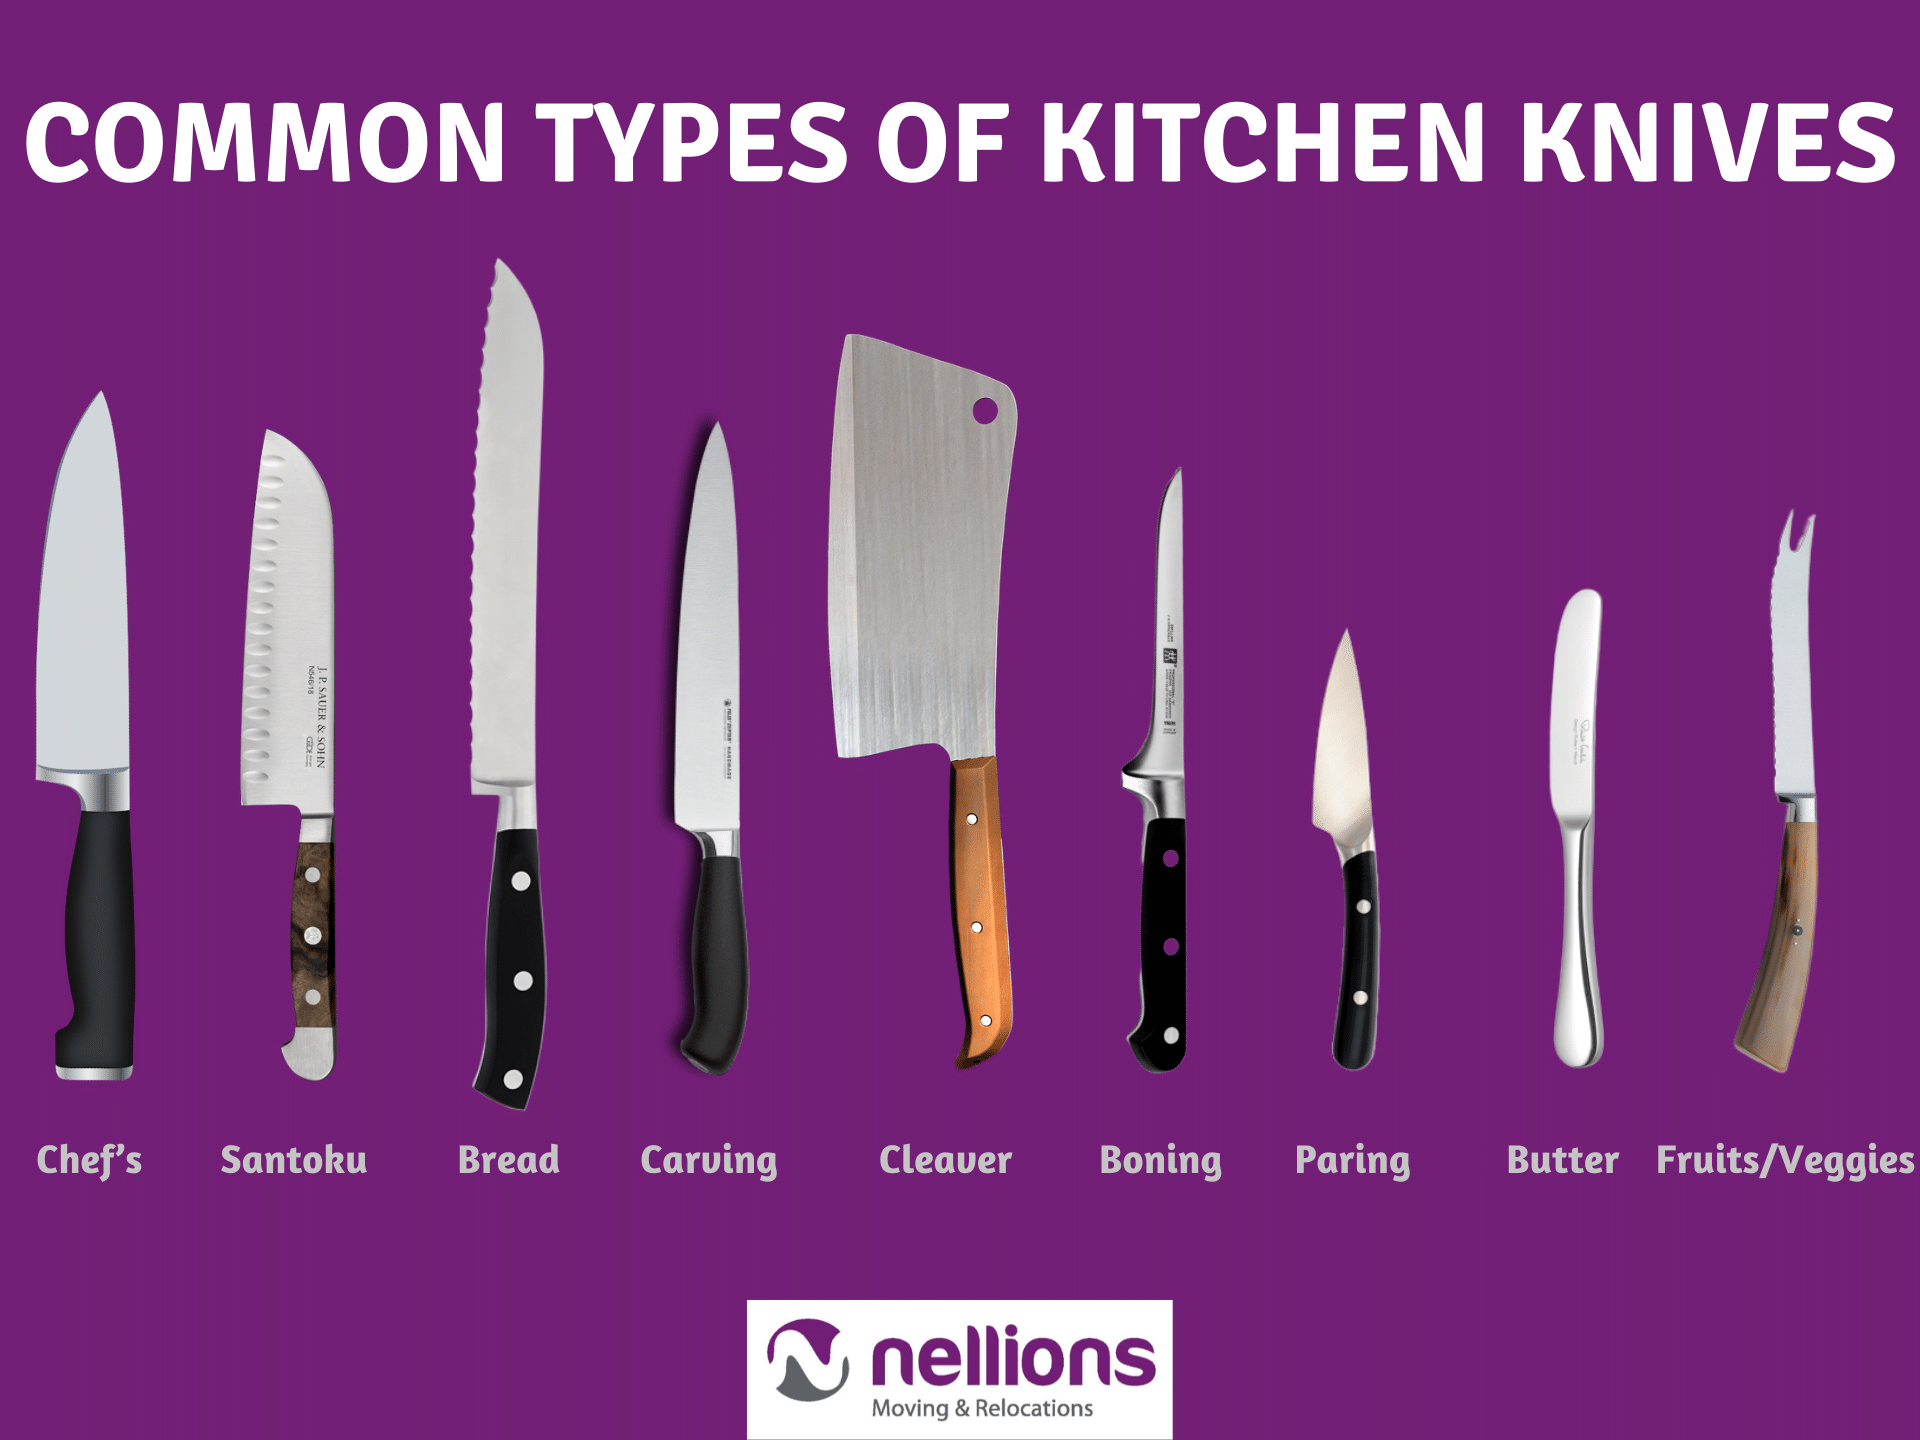 ejemplo con knives | Just Knives